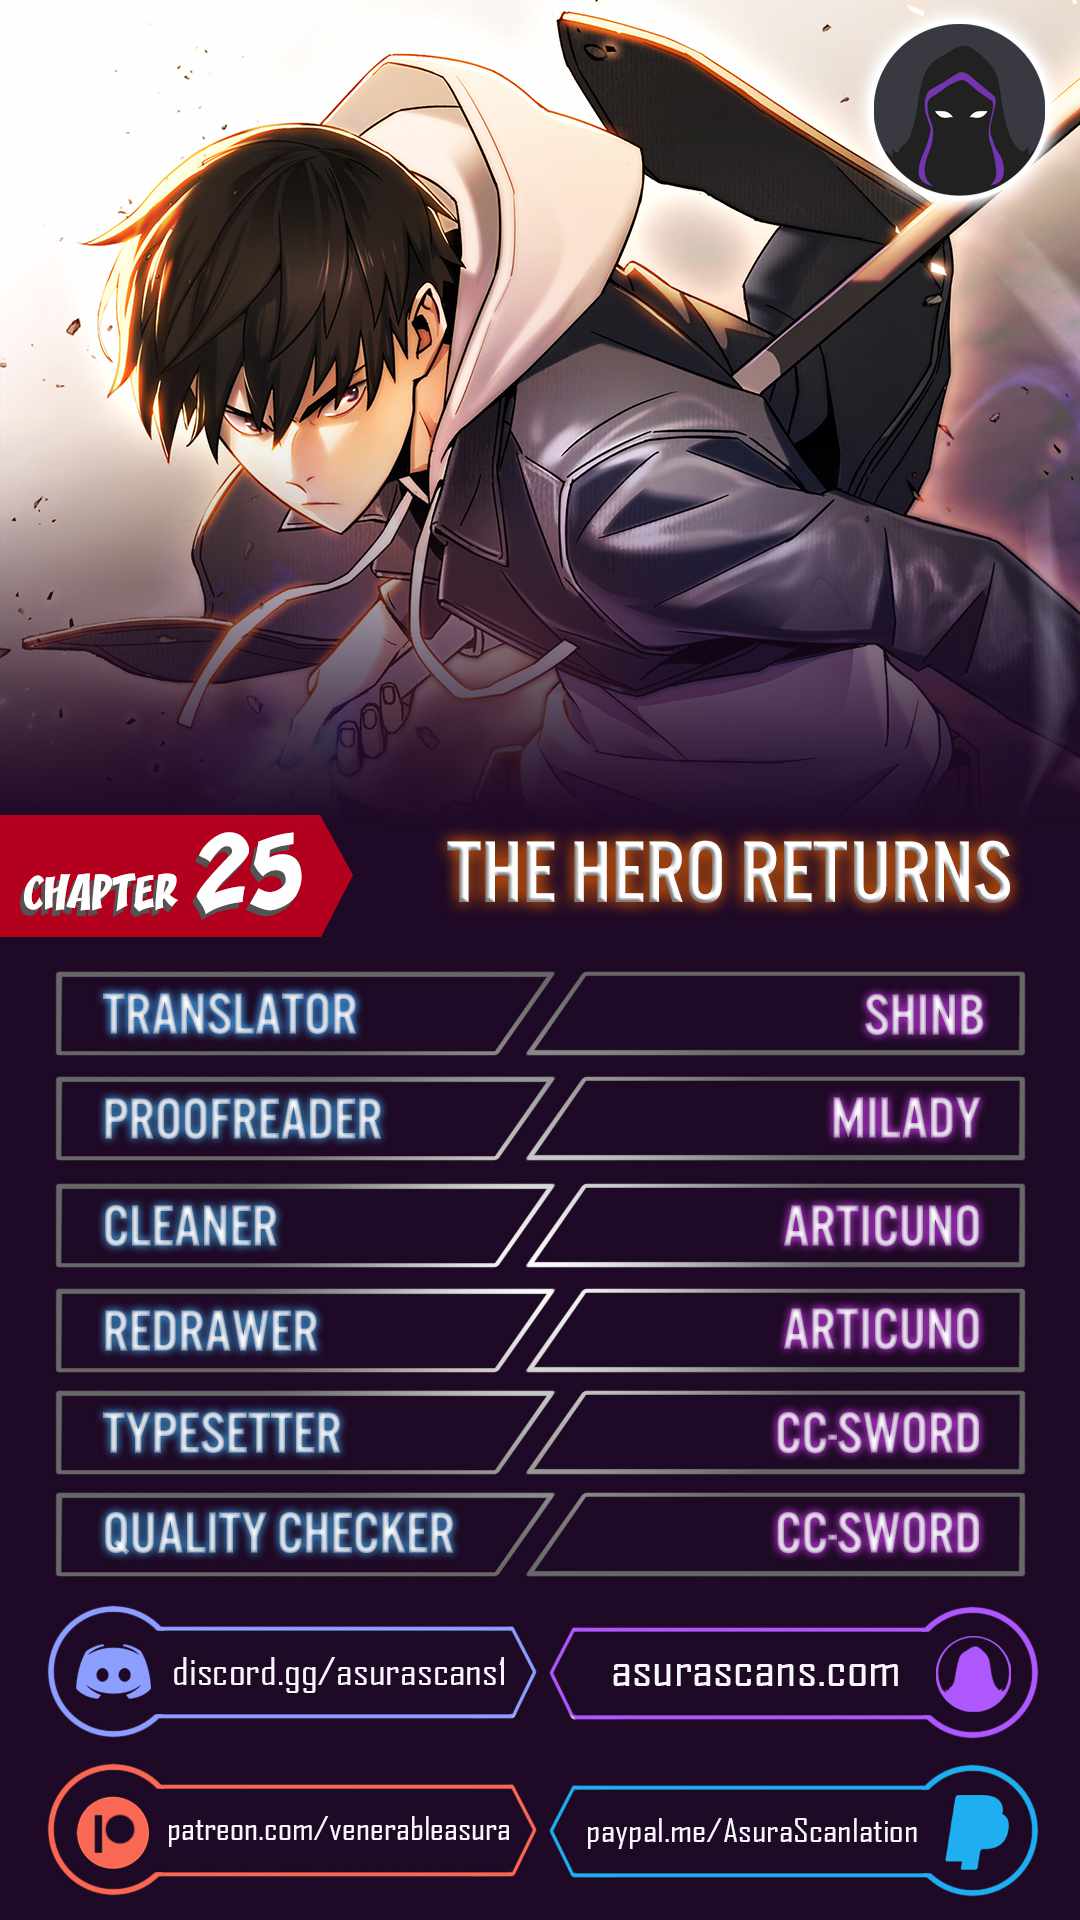 The Hero Returns chapter 25